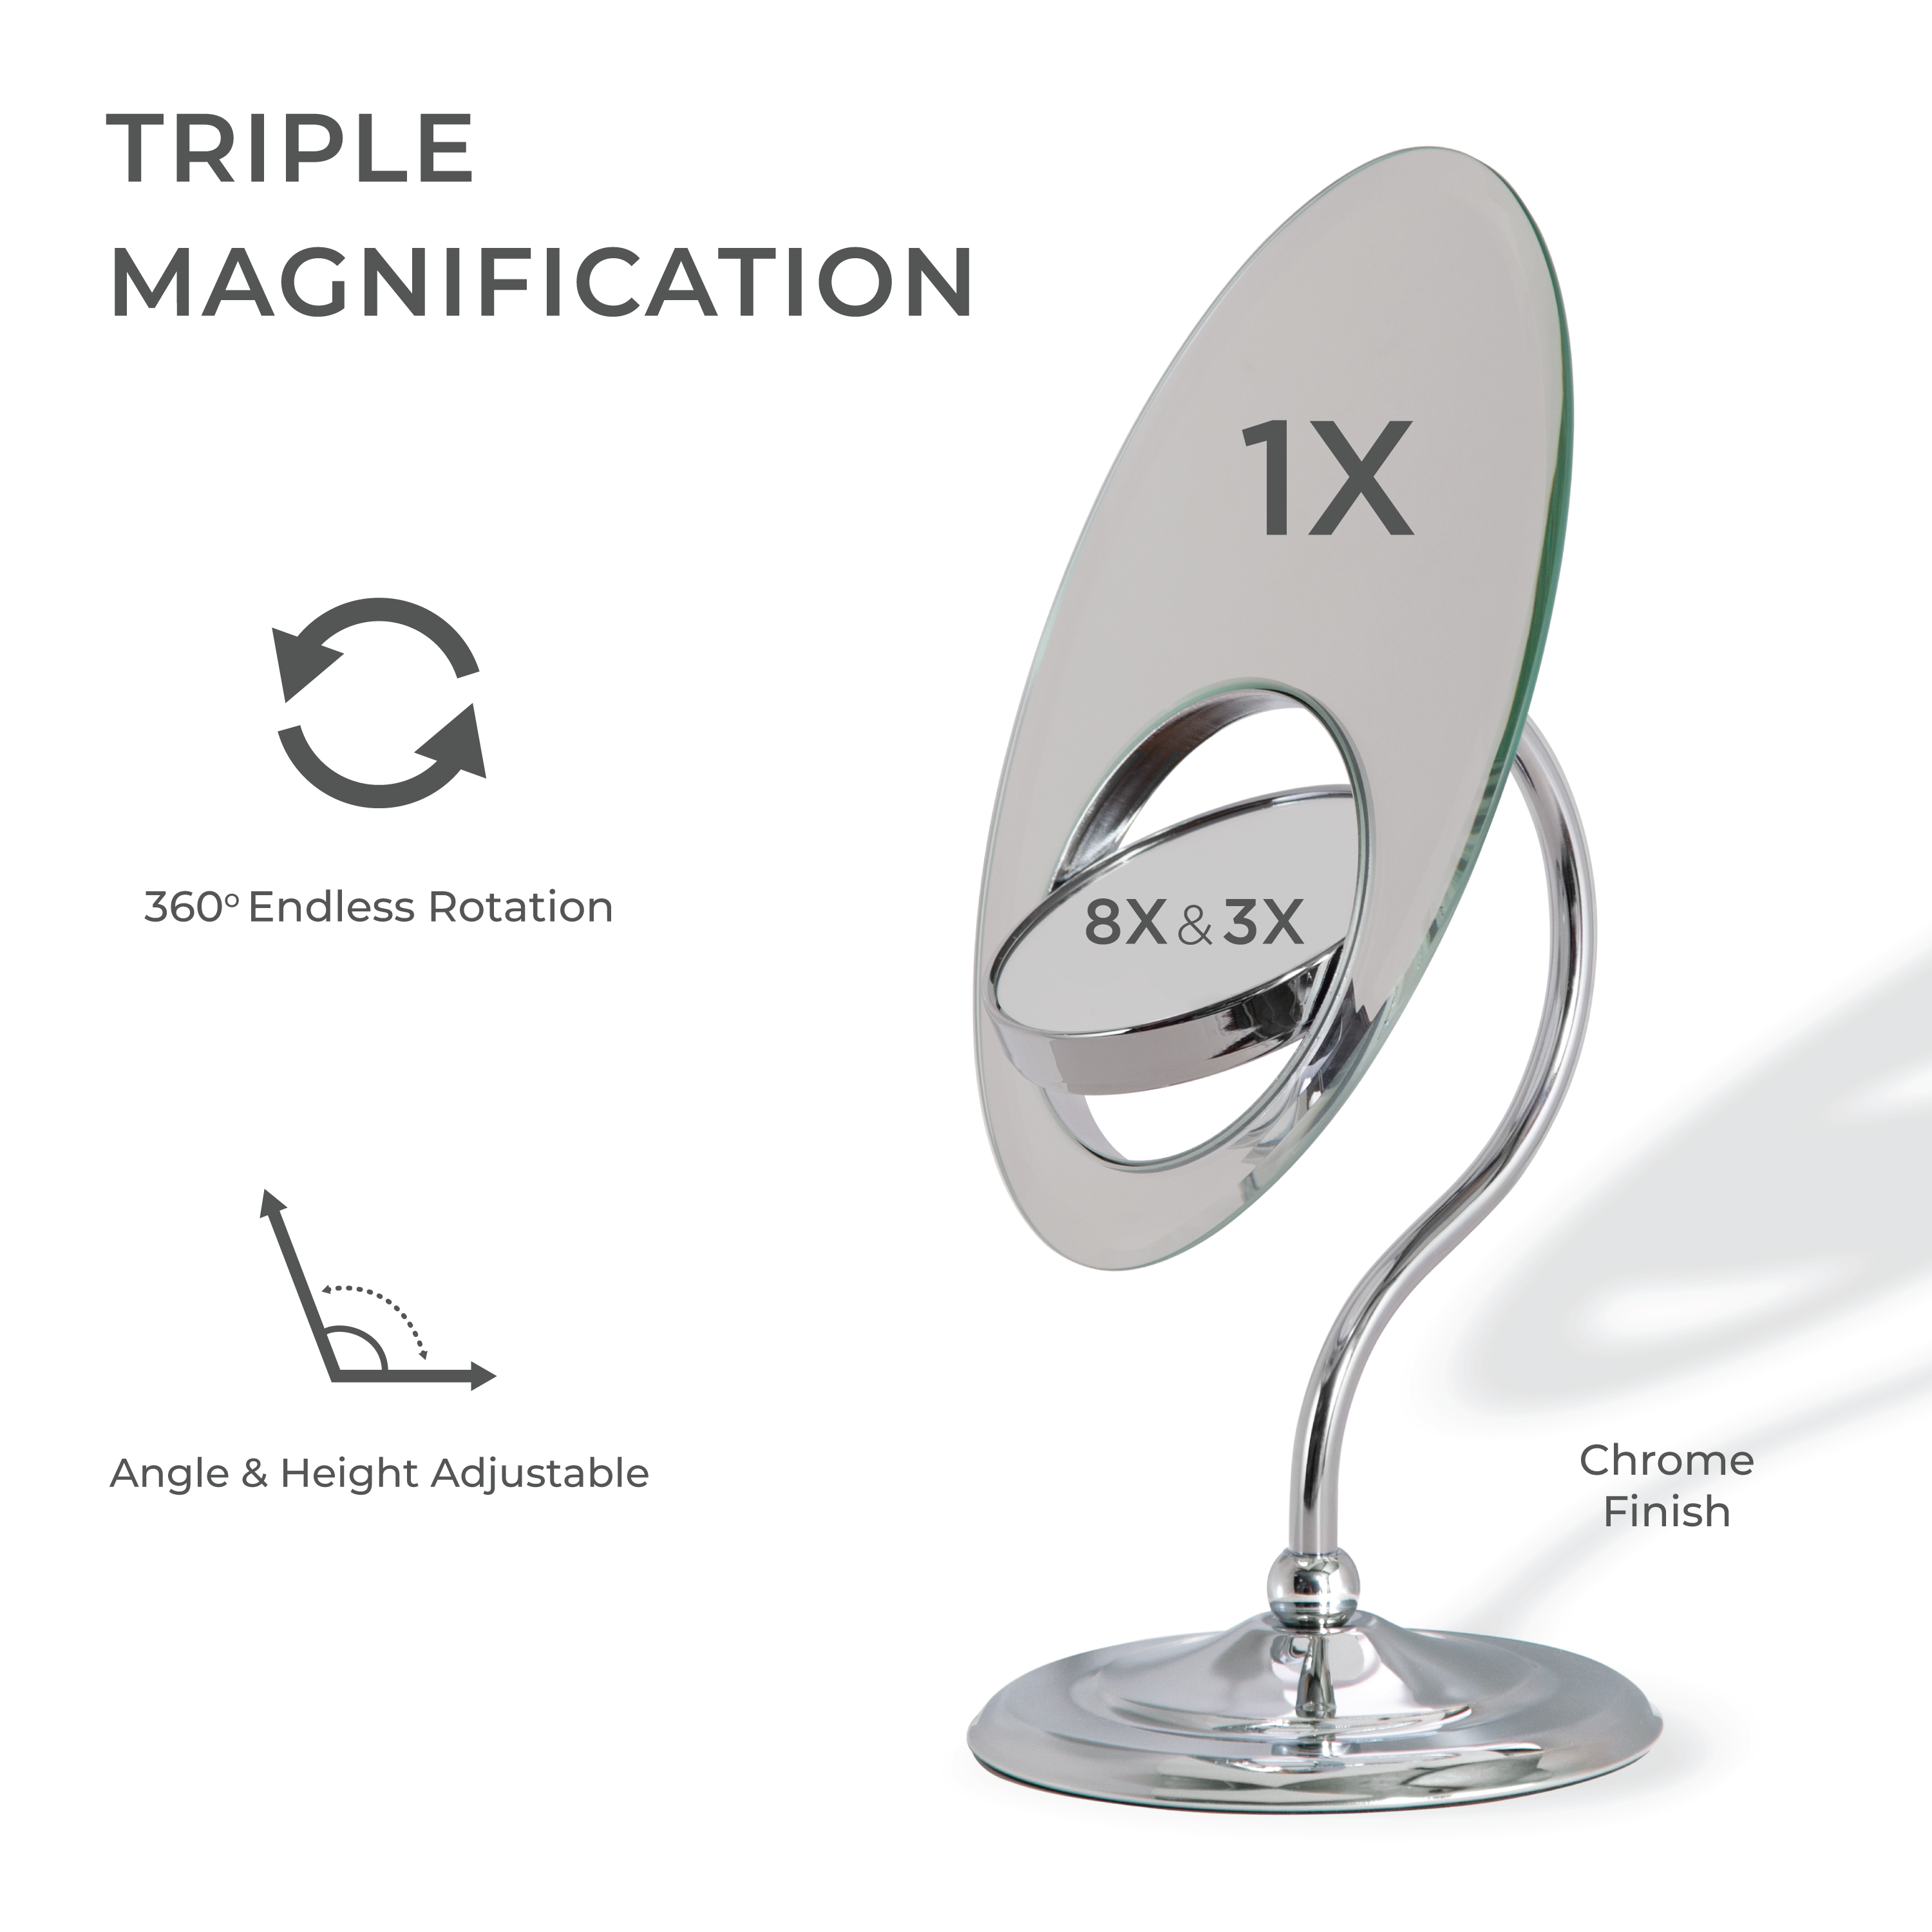 Tri-Optics Beveled Makeup Mirror with Magnification